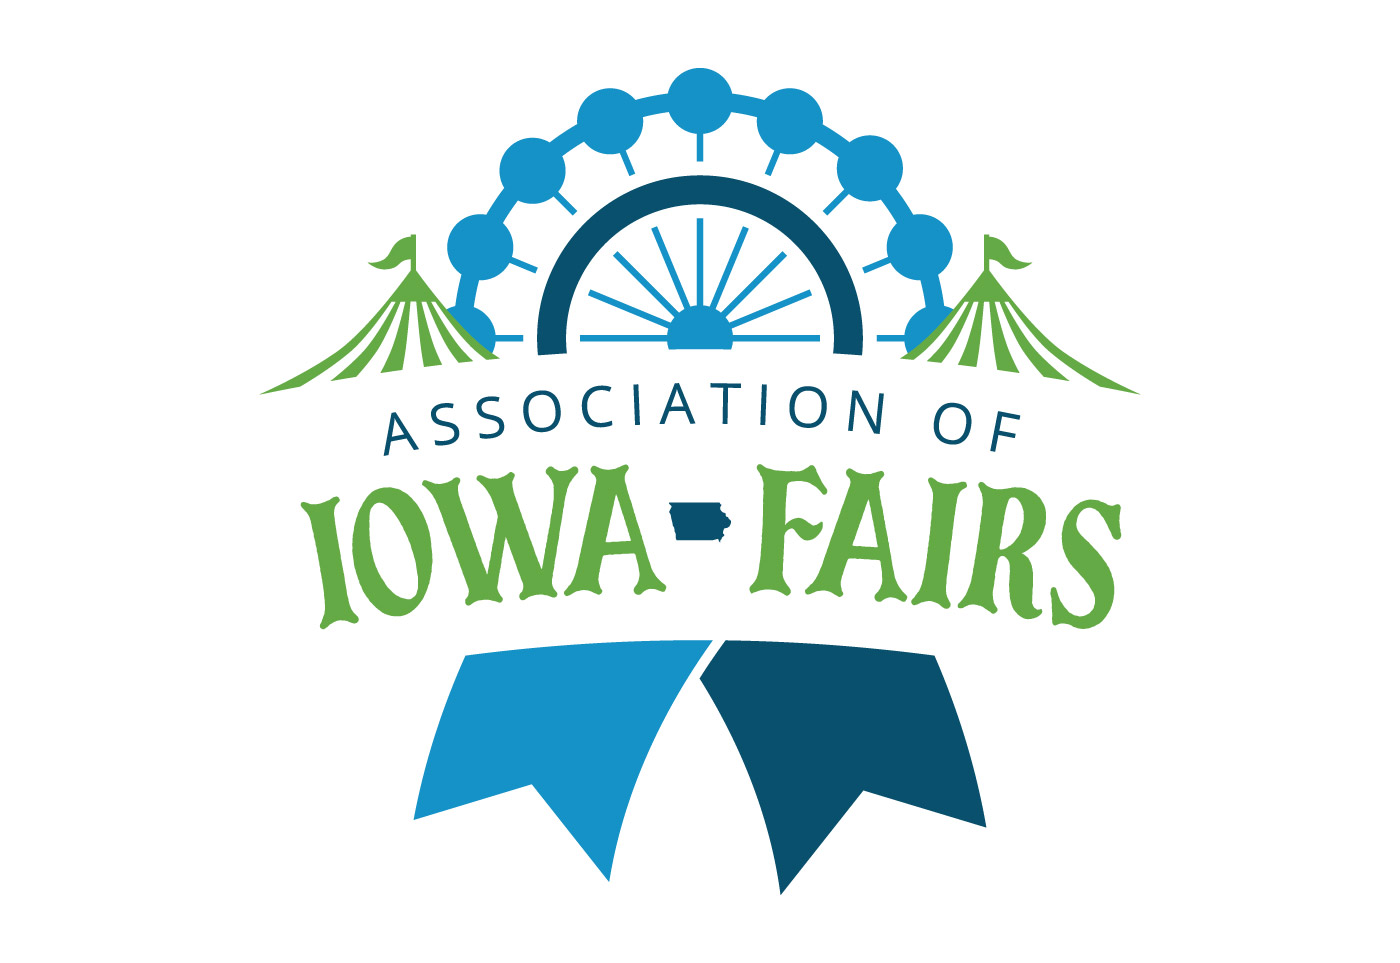 Association of Iowa Fairs - New Logo Design